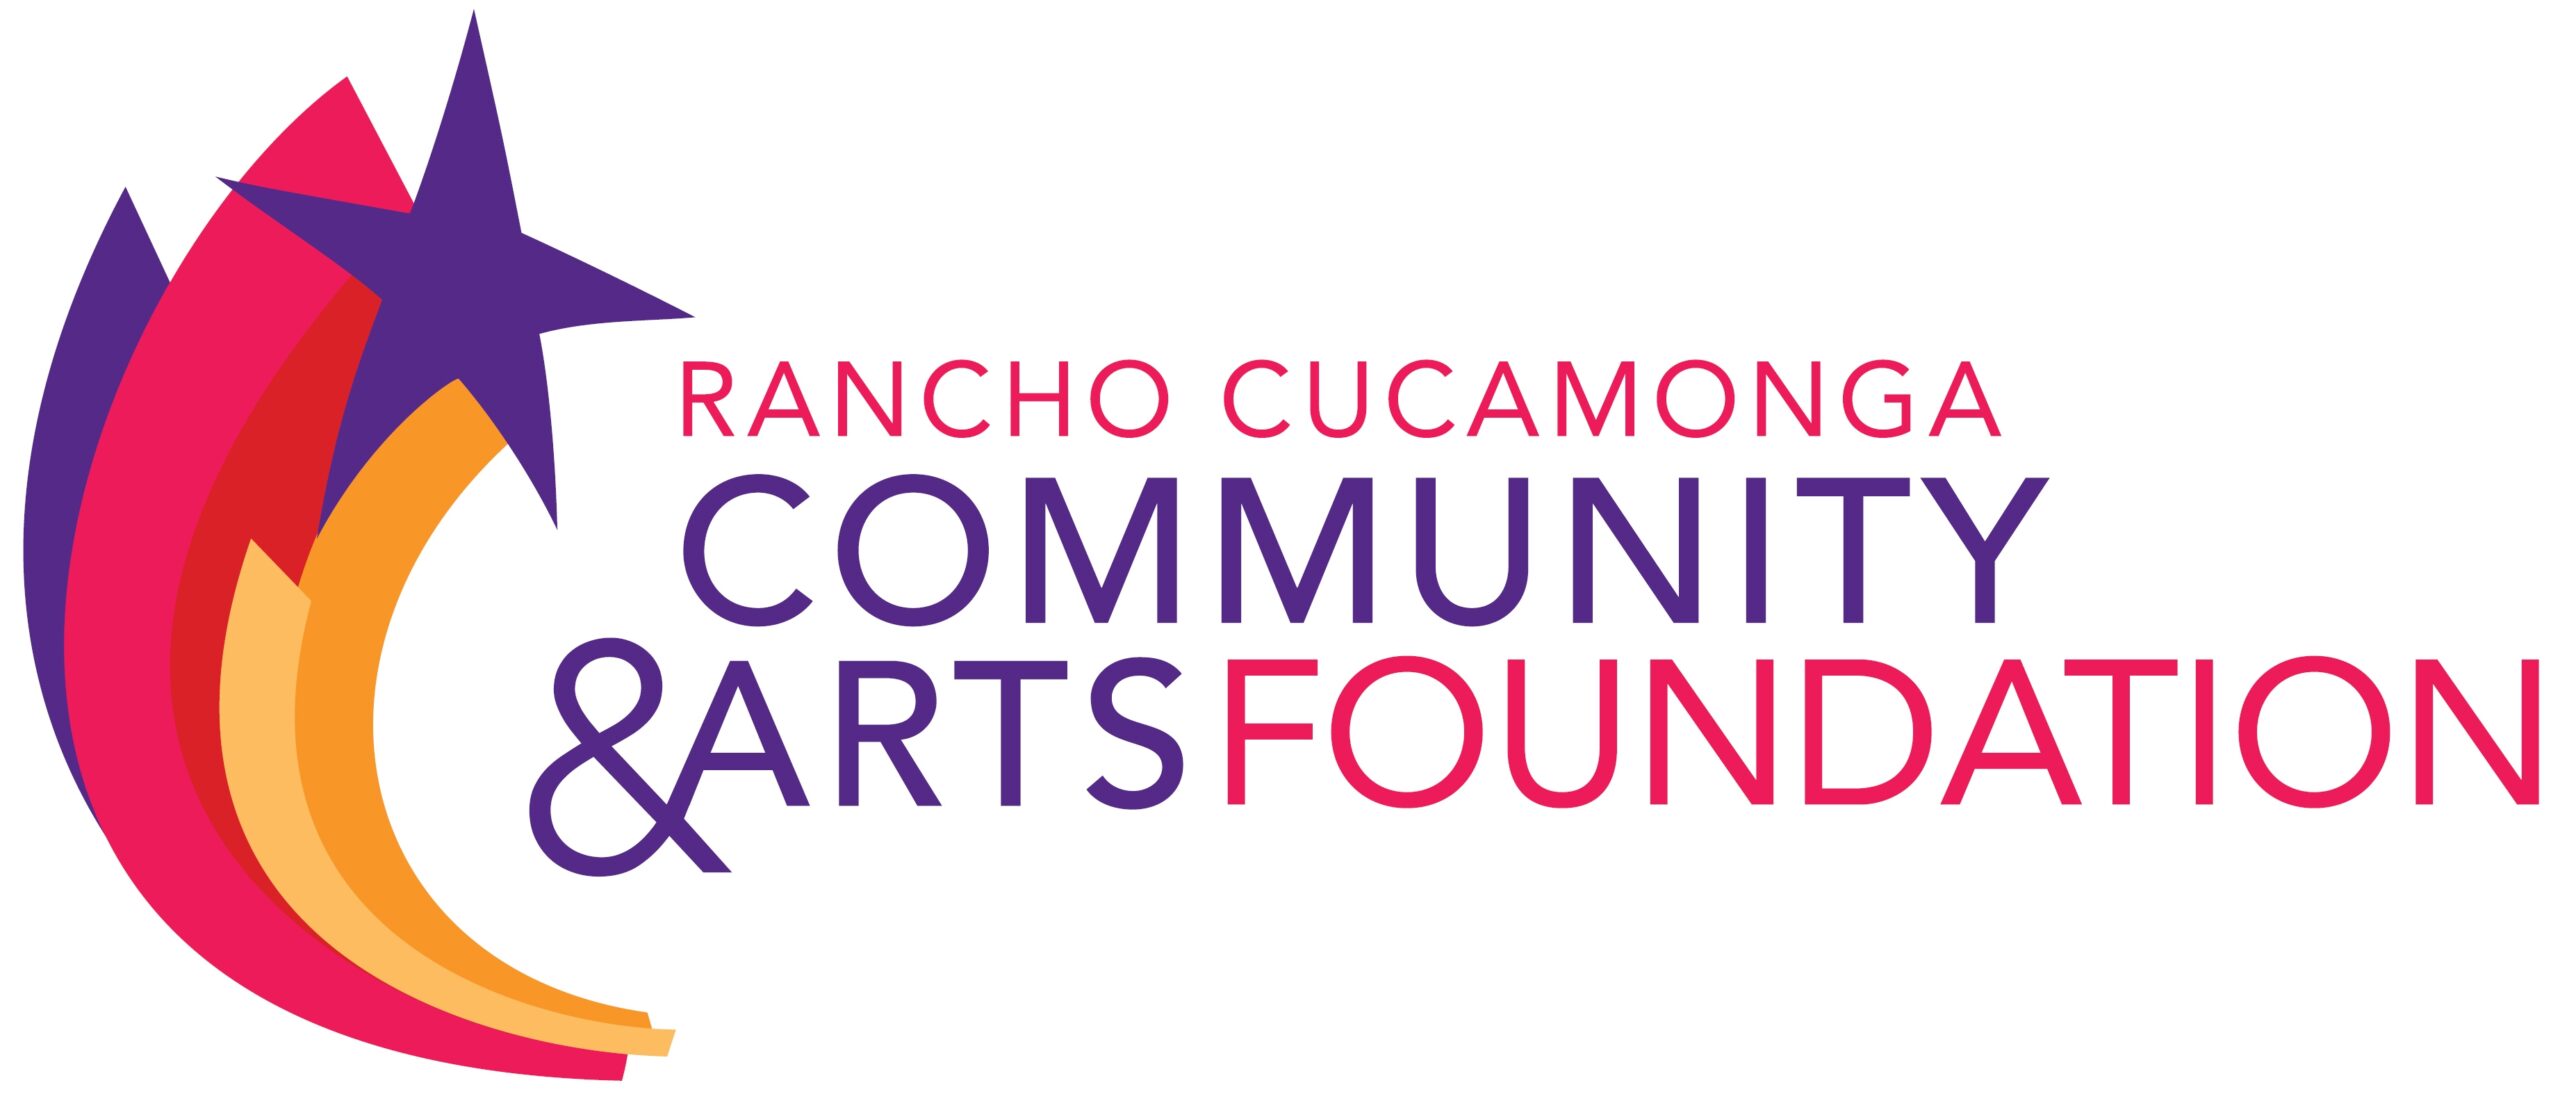 Rancho Cucamonga Community & Arts Foundation